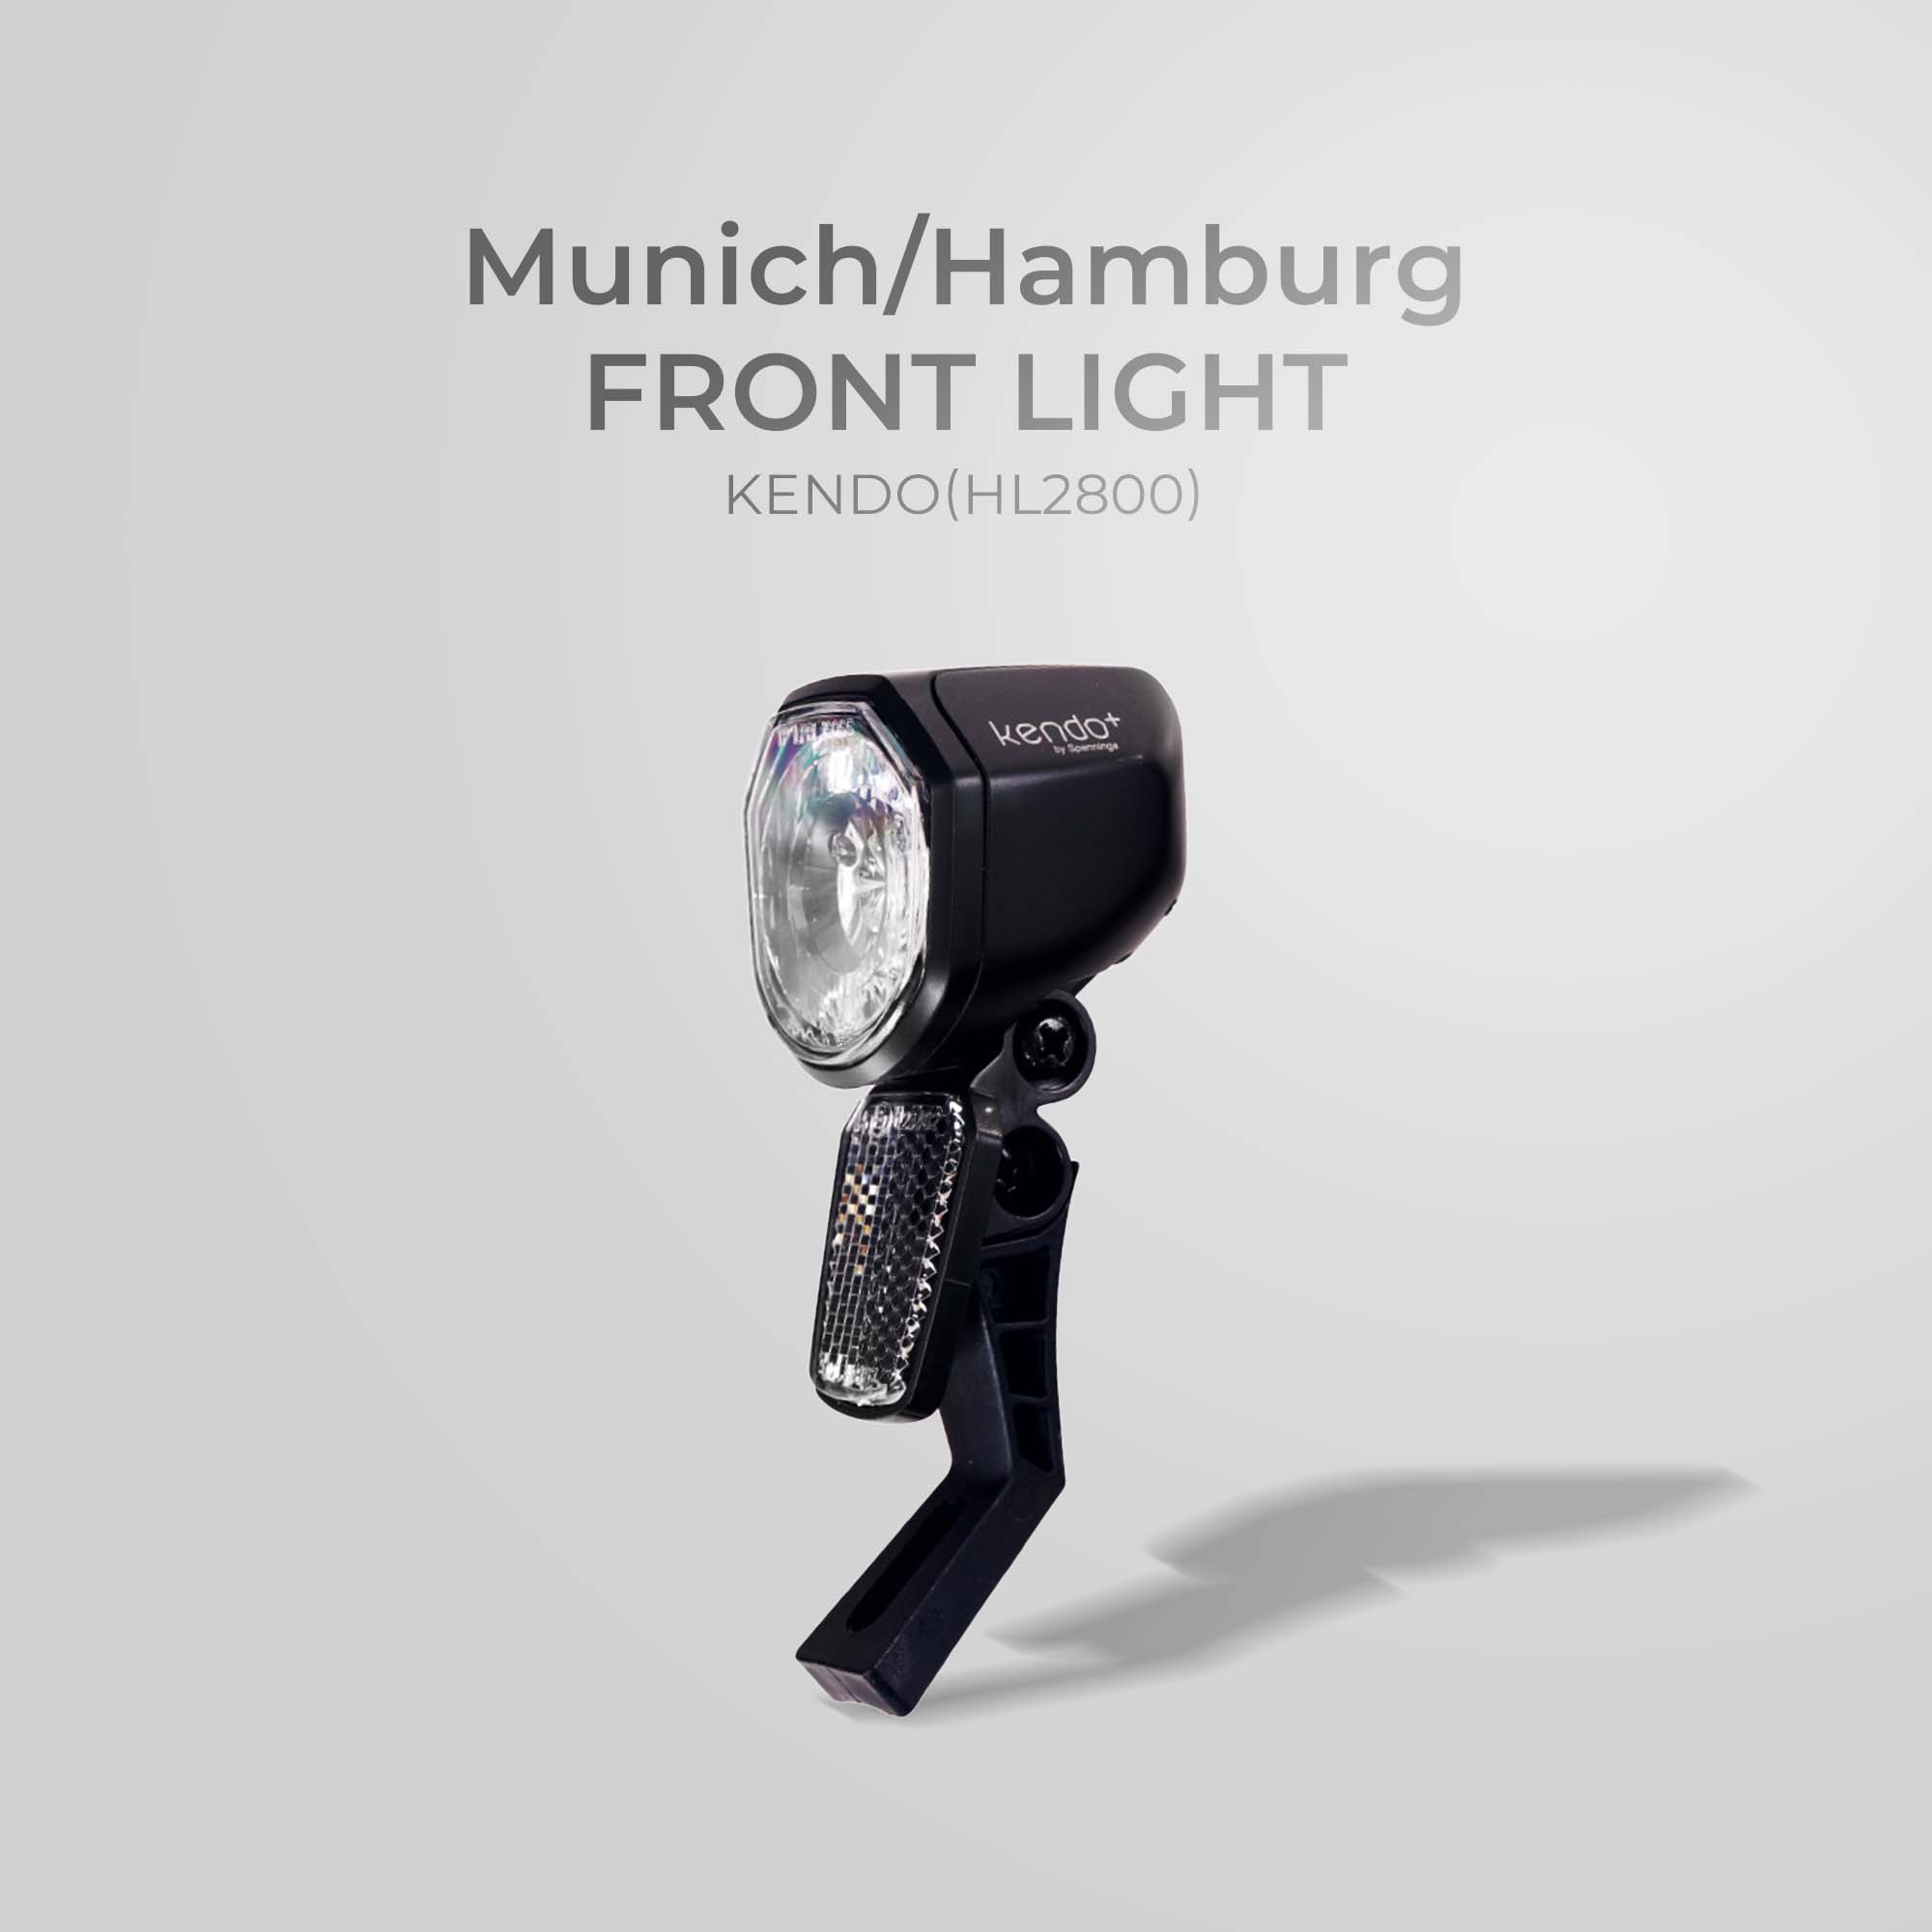 FRONT LIGHT KENDO(HL2800) NCM MUNICH/HAMBURG